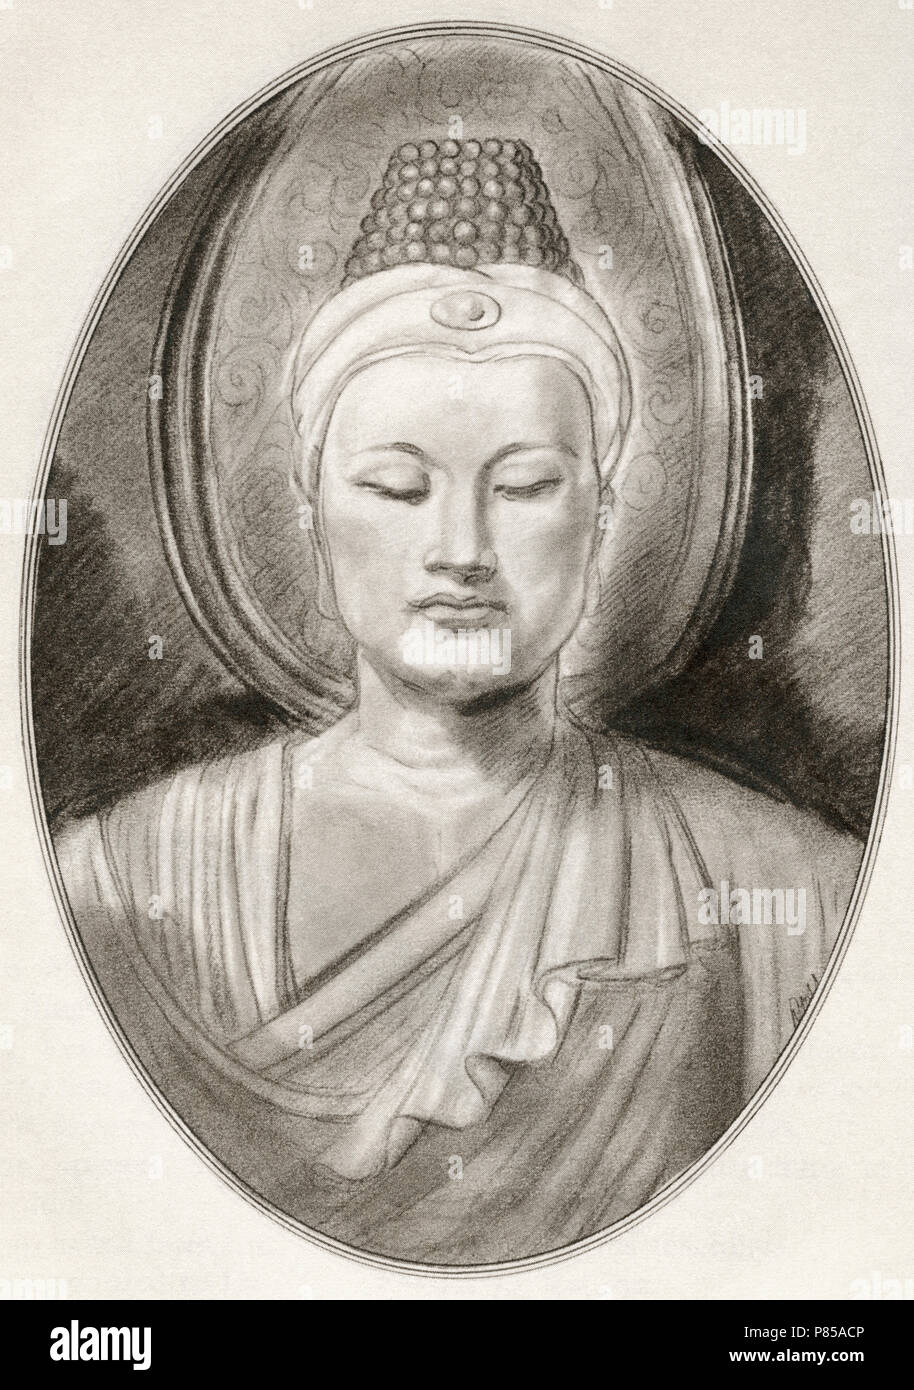 Gautama Buddha, c. 563/480 - c. 483/400 BC, aka Siddhārtha Gautama, Buddha Shakyamuni o il Buddha. (Ascetica śramaṇa) e salvia. Illustrazione da Gordon Ross, artista americano e illustrator (1873-1946), dal vivere le biografie di leader religiosi. Foto Stock